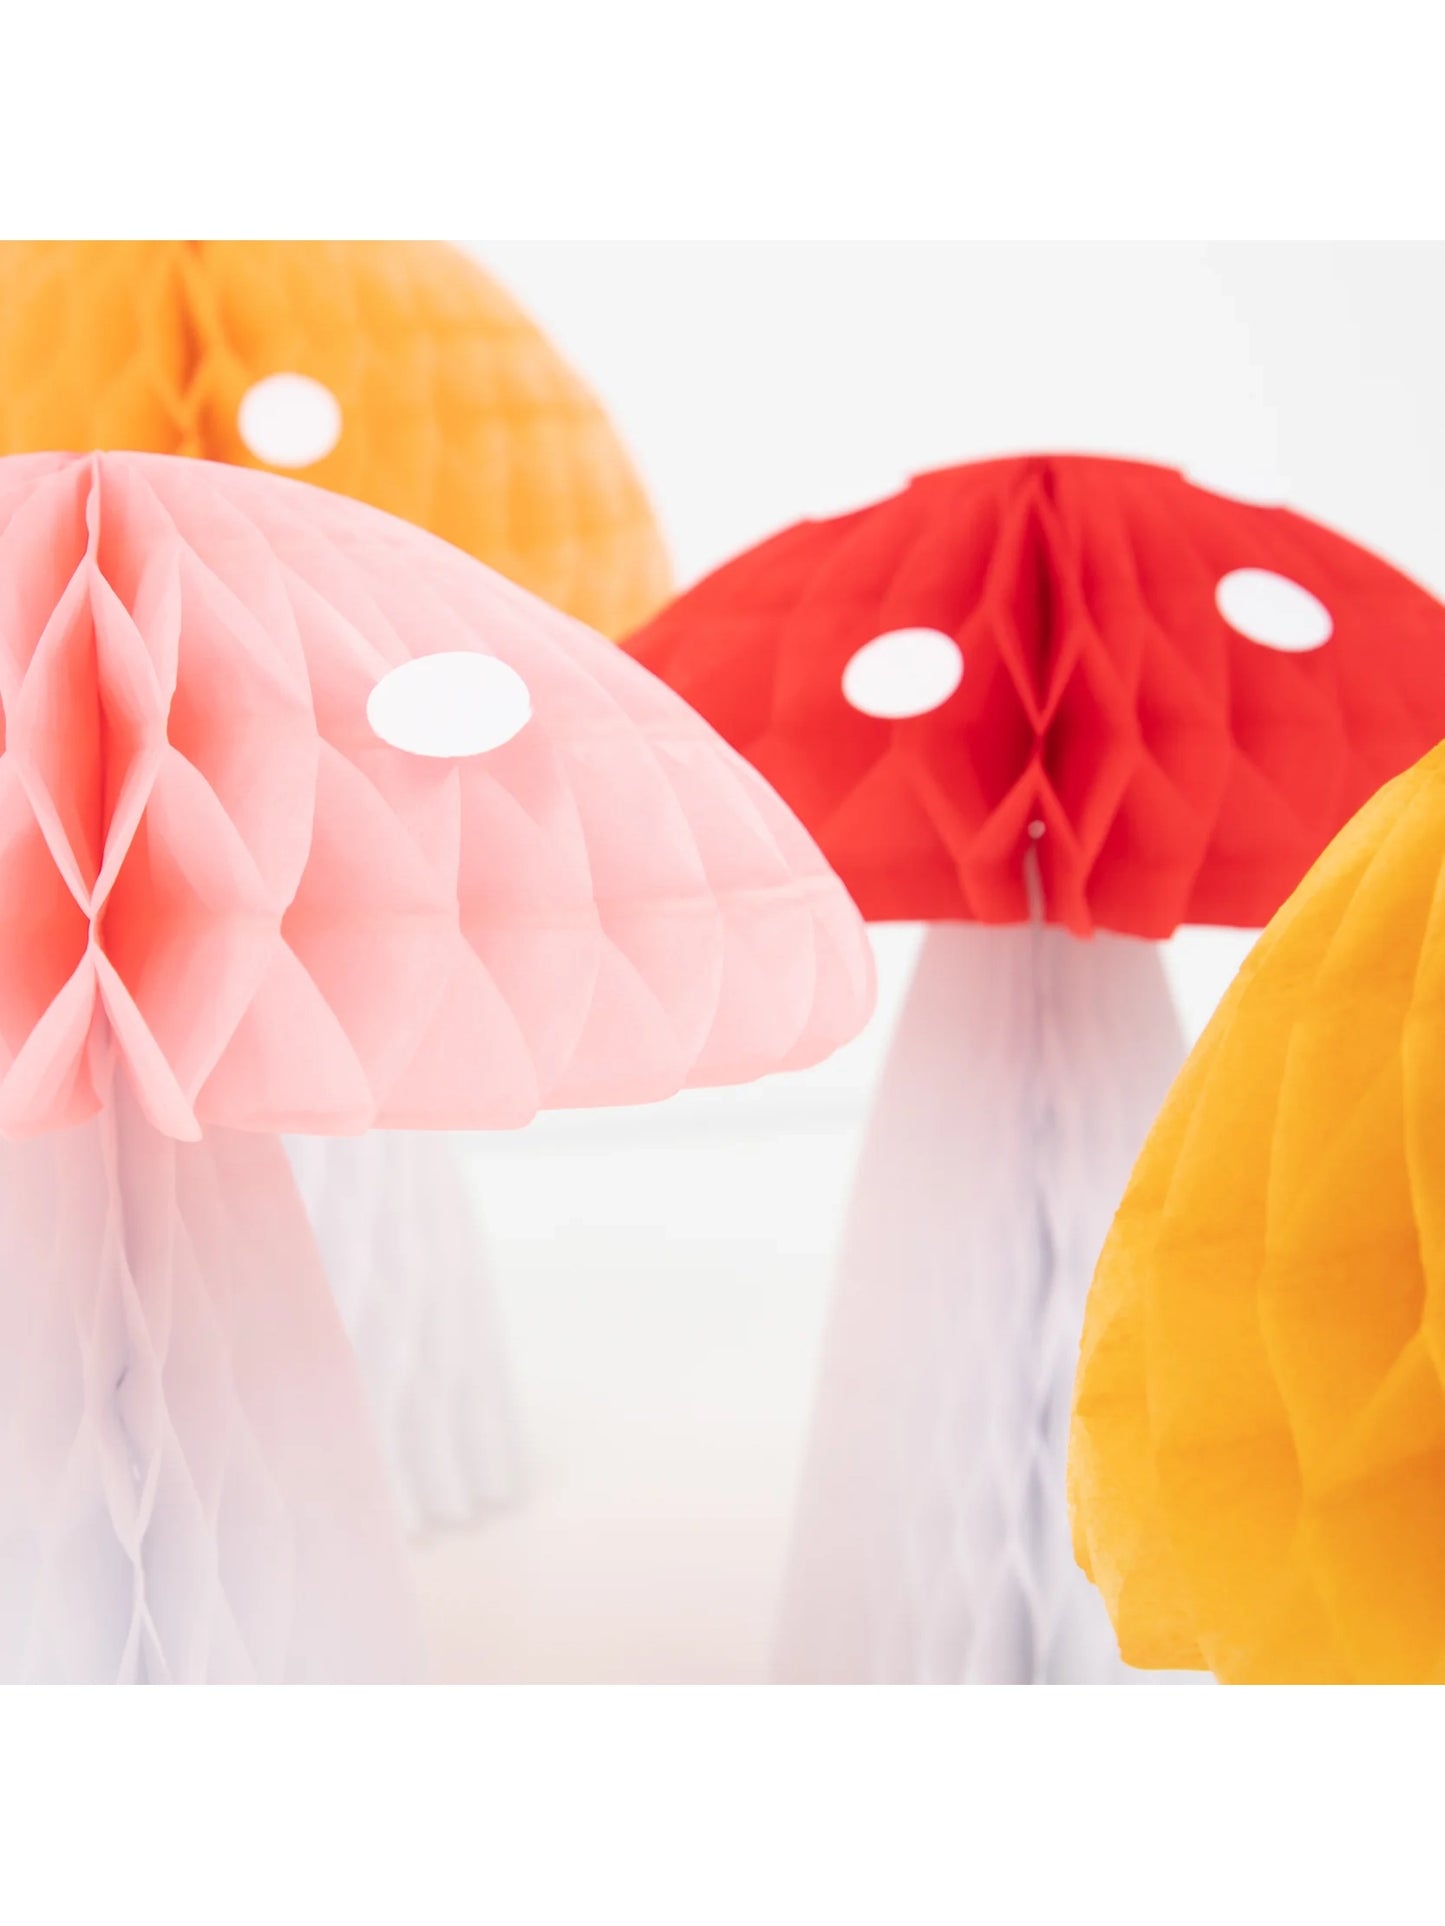 Load image into Gallery viewer, Honeycomb Mushroom Decorations
